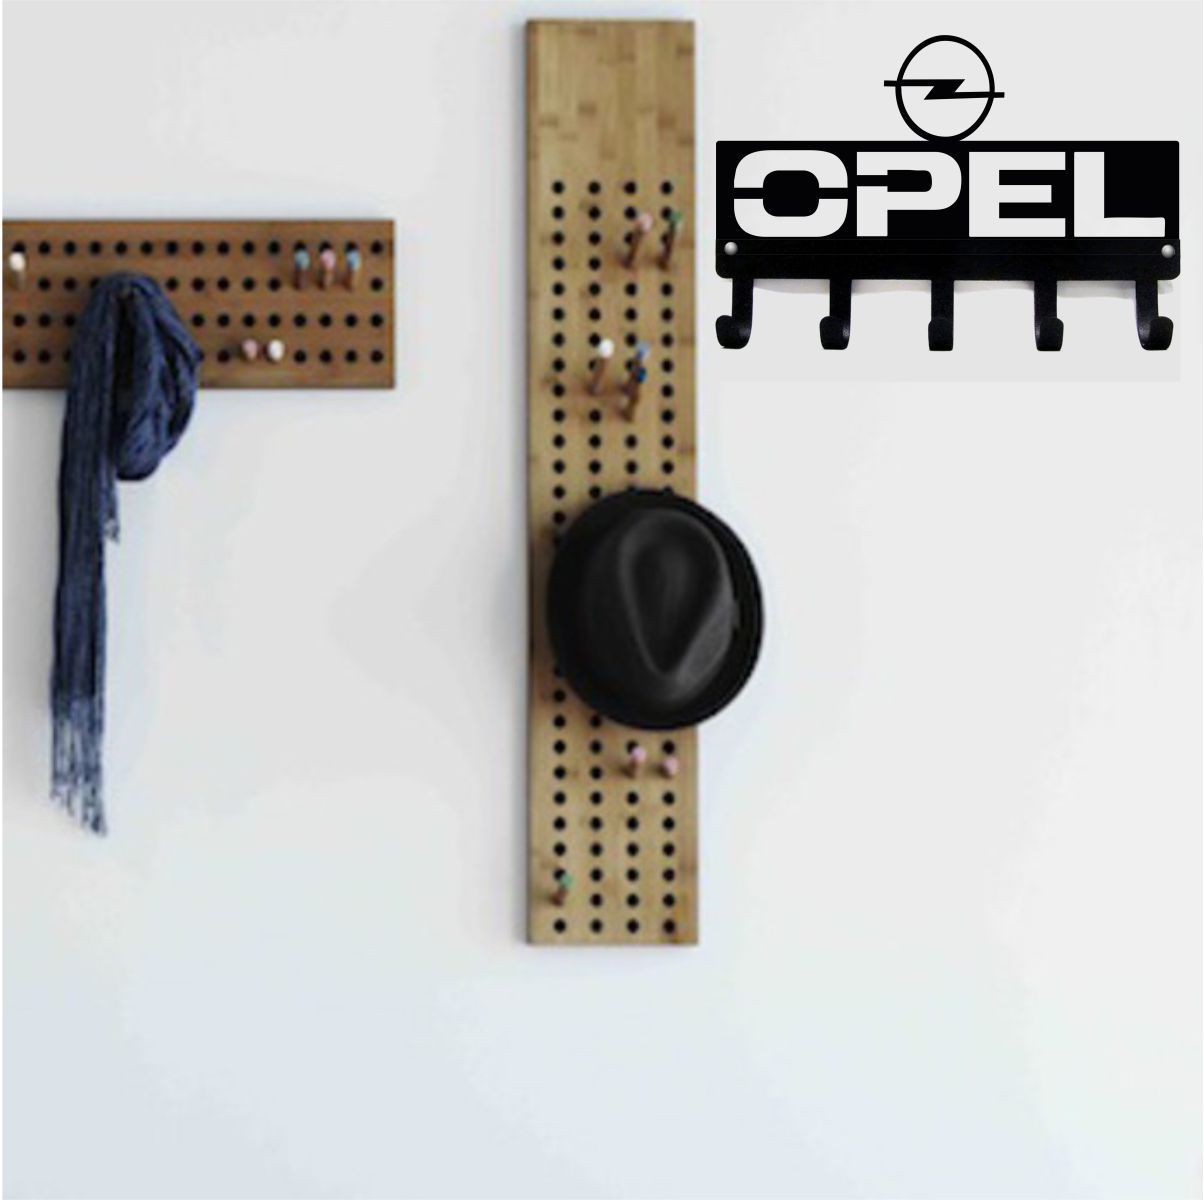 Opel Metal Key Holder